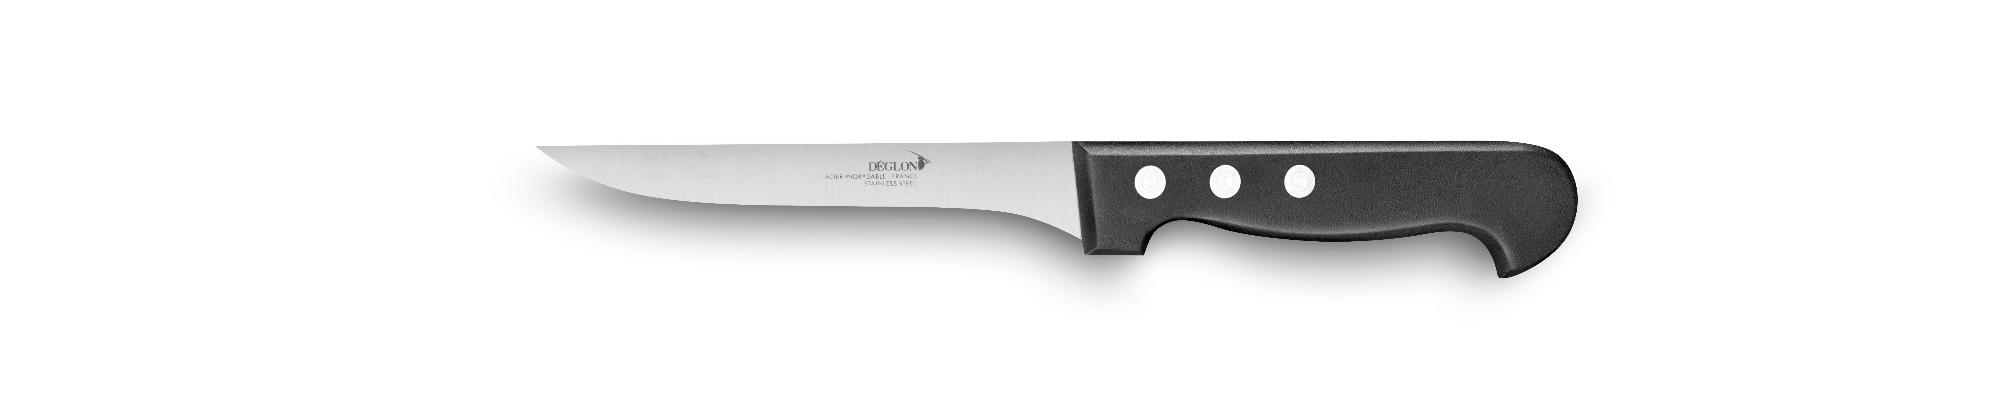 Maxifil narrow boning knife, 150mm